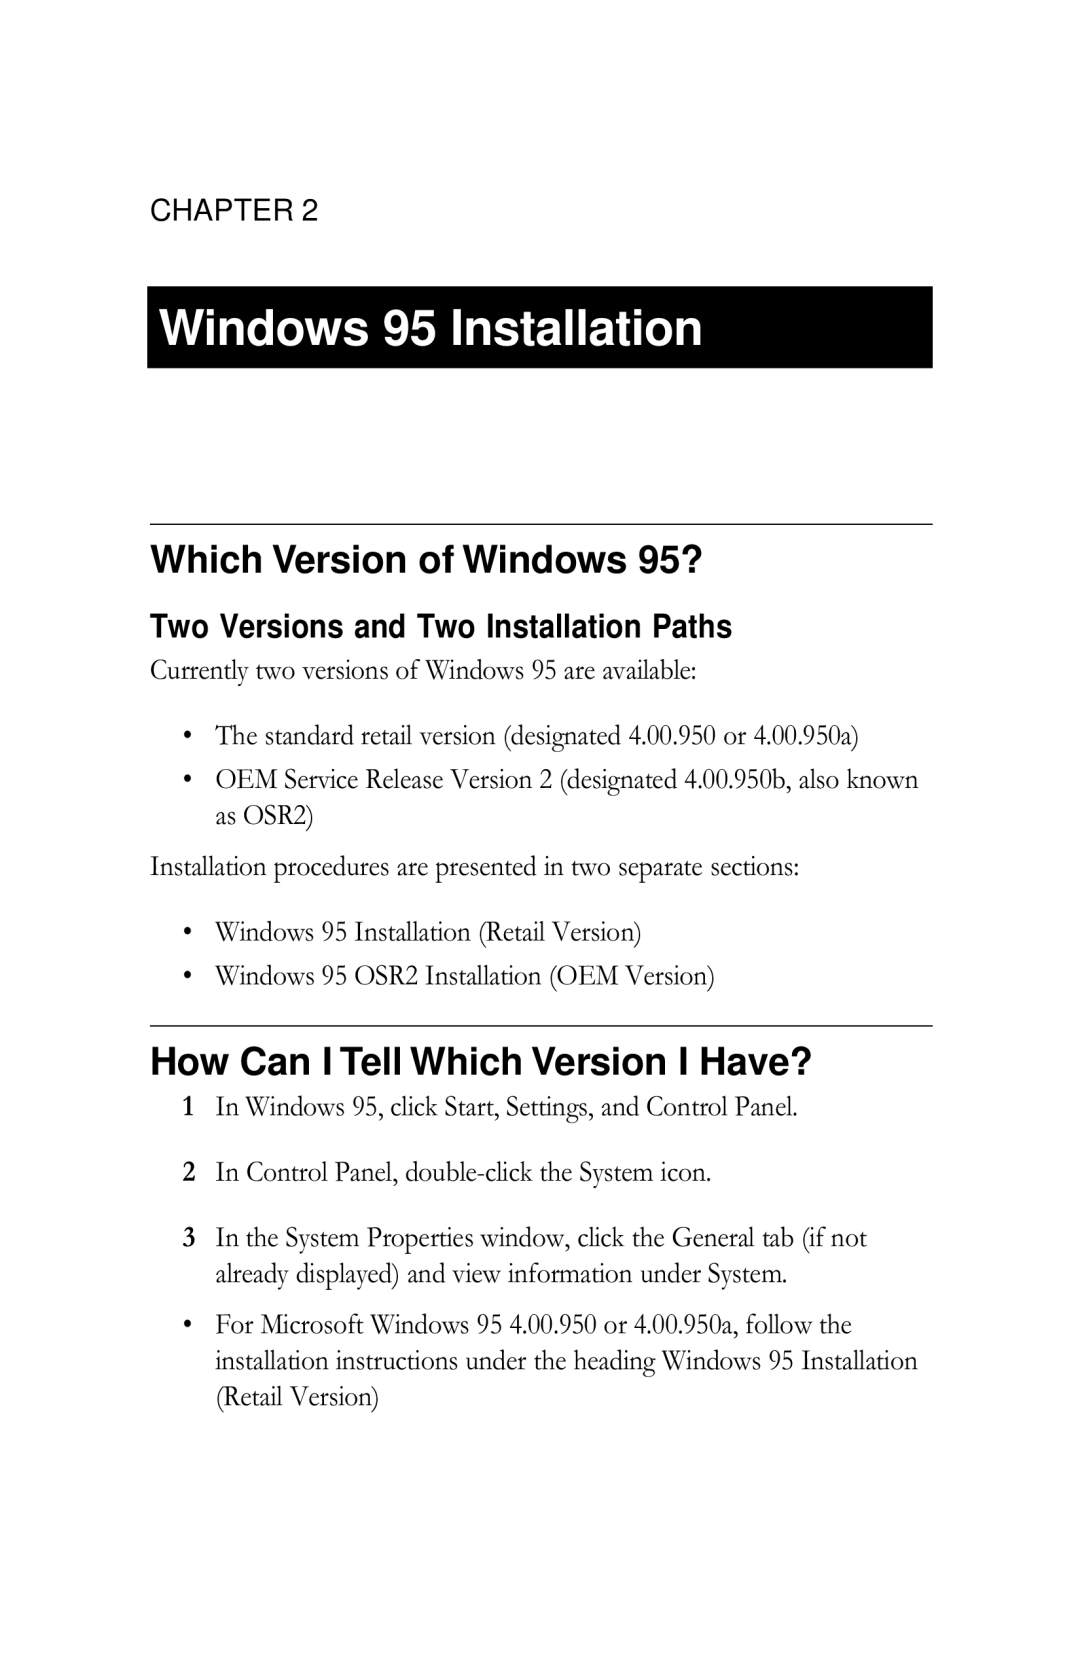 Intel PRO/100 appendix Windows 95 Installation, Which Version of Windows 95?, How Can I Tell Which Version I Have? 